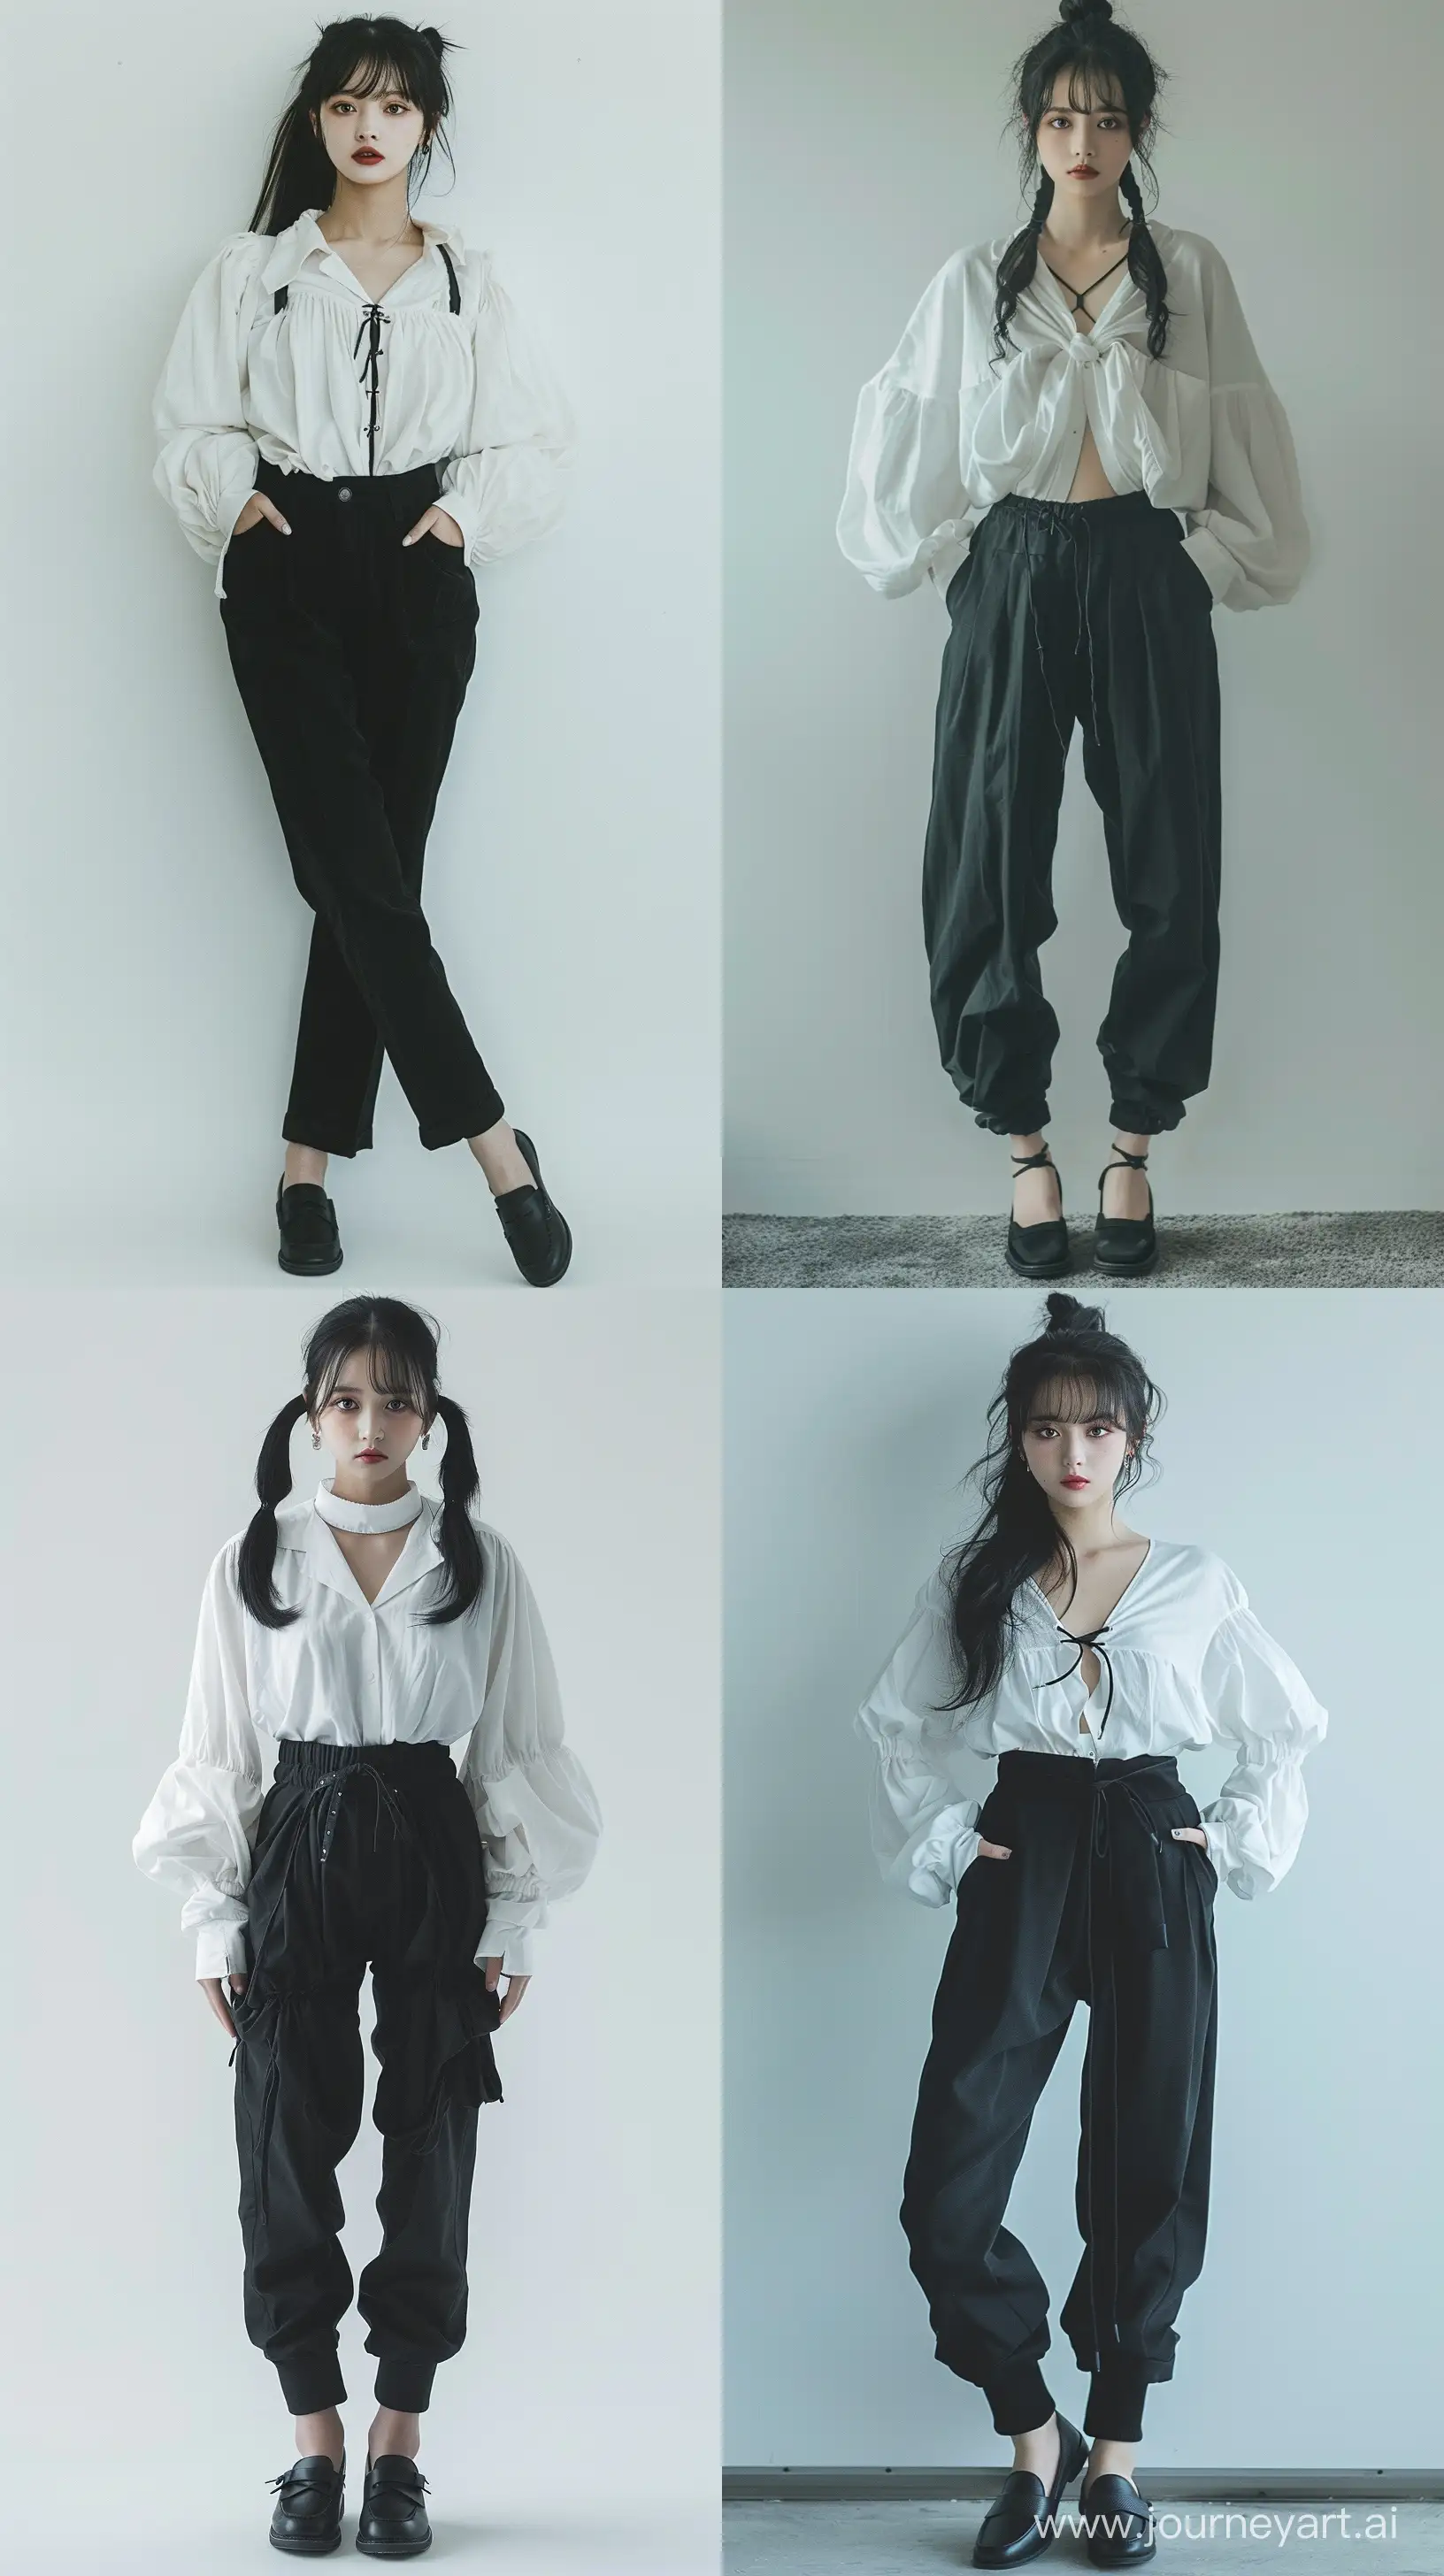 Minimalist-Chinese-Fashion-Black-and-White-Elegance-Inspired-by-Blackpinks-Jennie